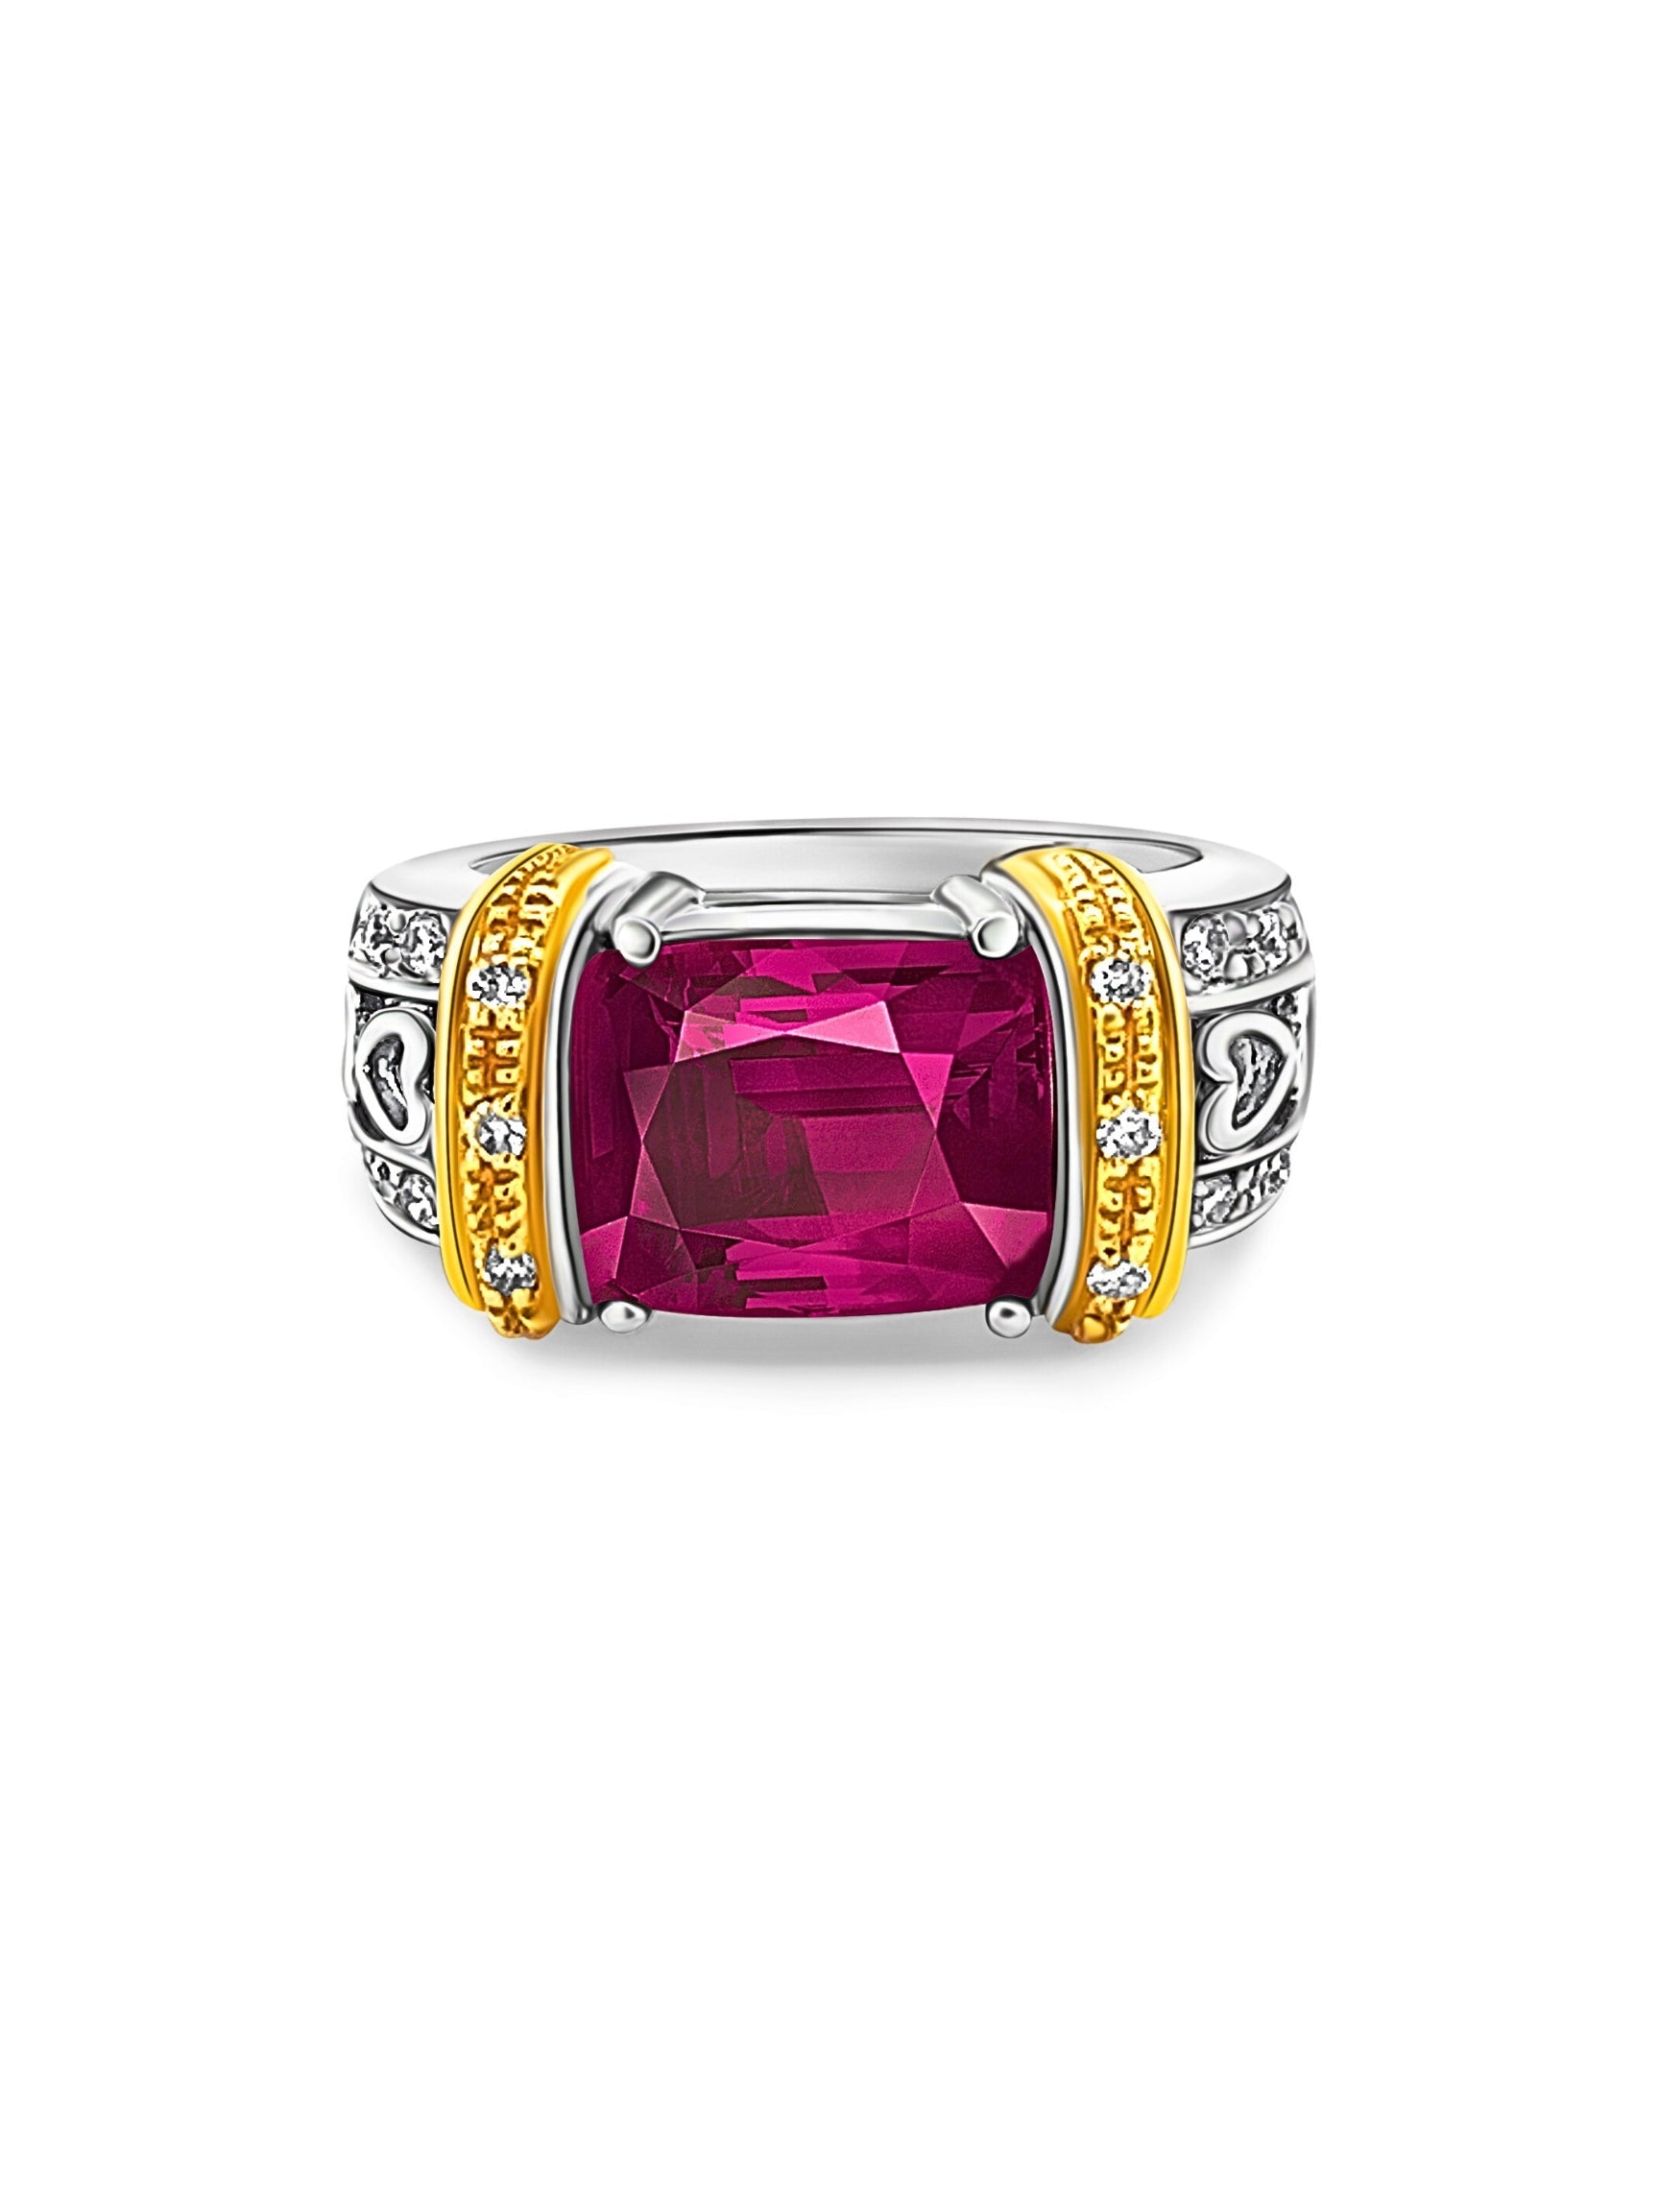 5_50-Carat-Rubellite-Tourmaline-Carved-Heart-Motif-Filigree-East-West-Ring-Semi-Precious-Jewelry.jpg